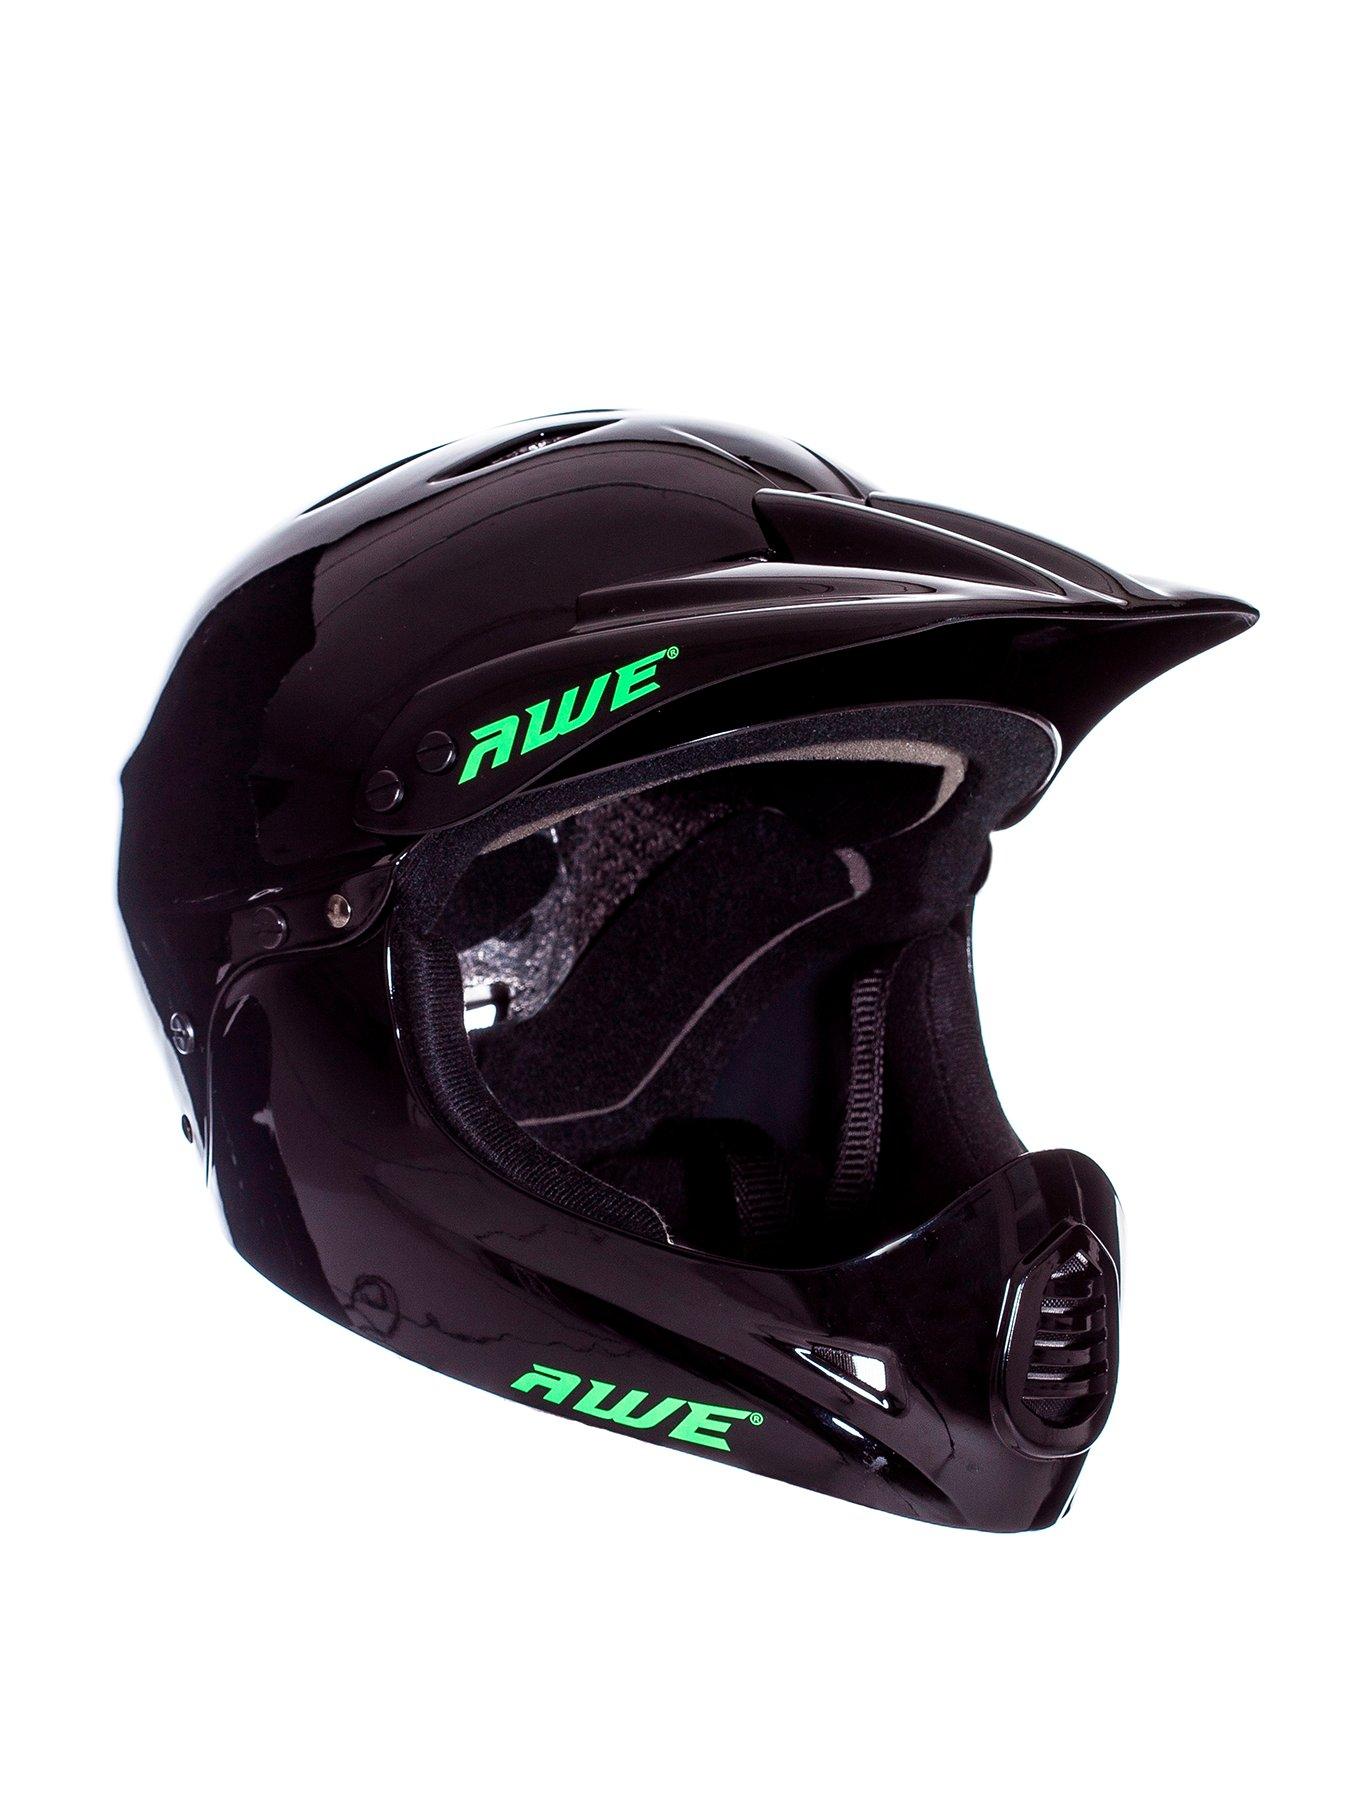 bike helmets ireland